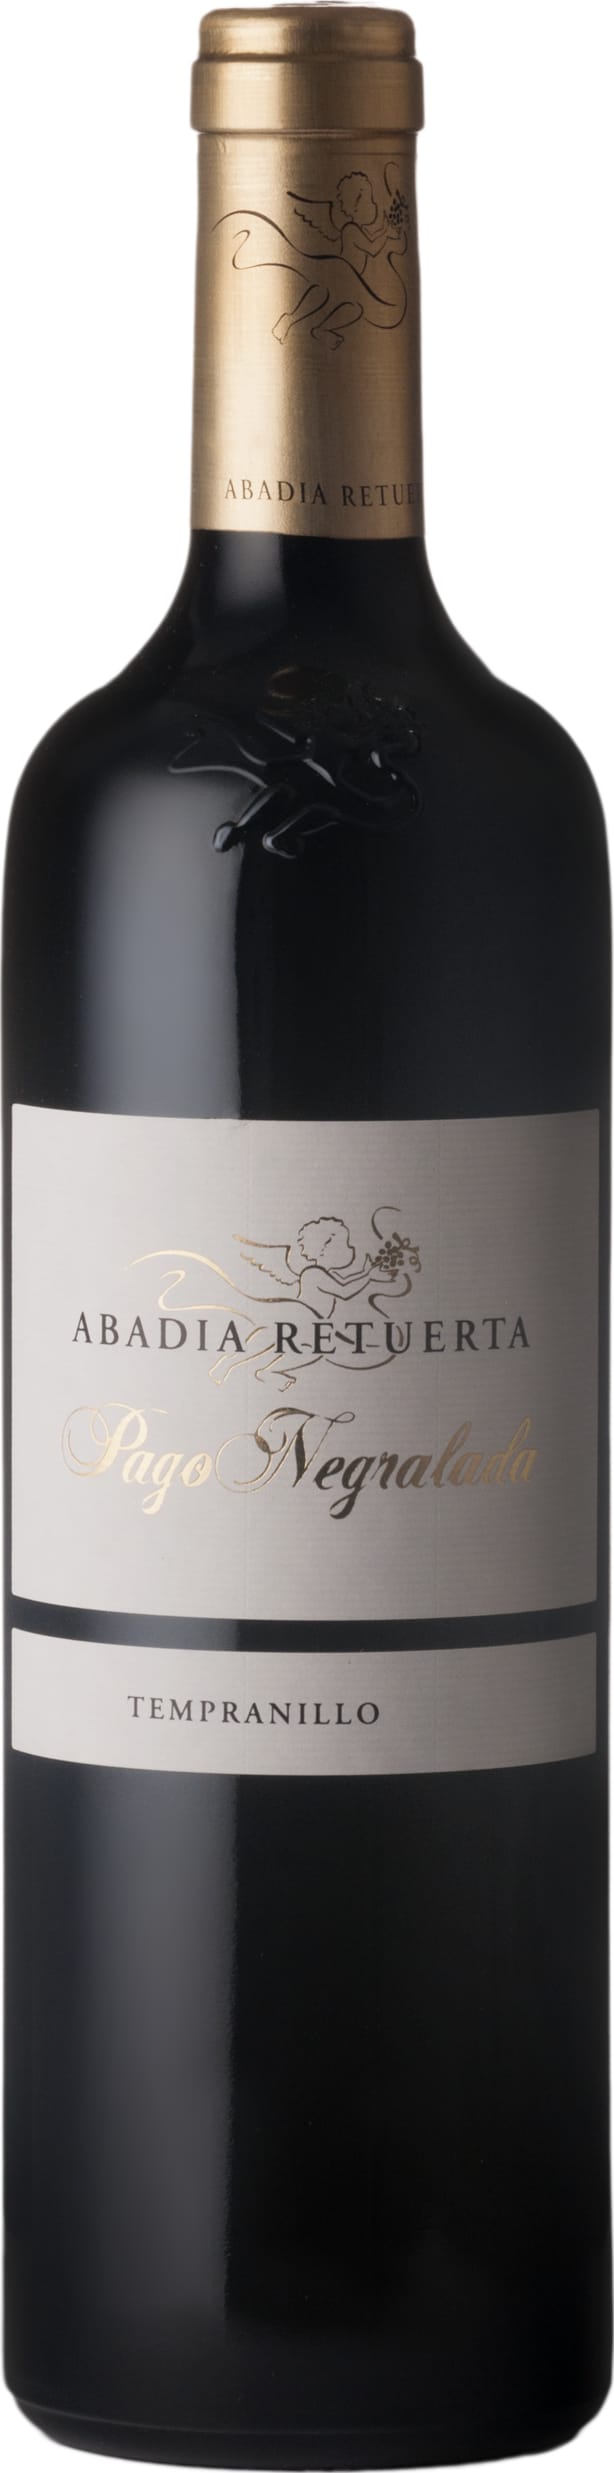 Abadia Retuerta Pago Negralada Tempranillo 2017 75cl - Buy Abadia Retuerta Wines from GREAT WINES DIRECT wine shop